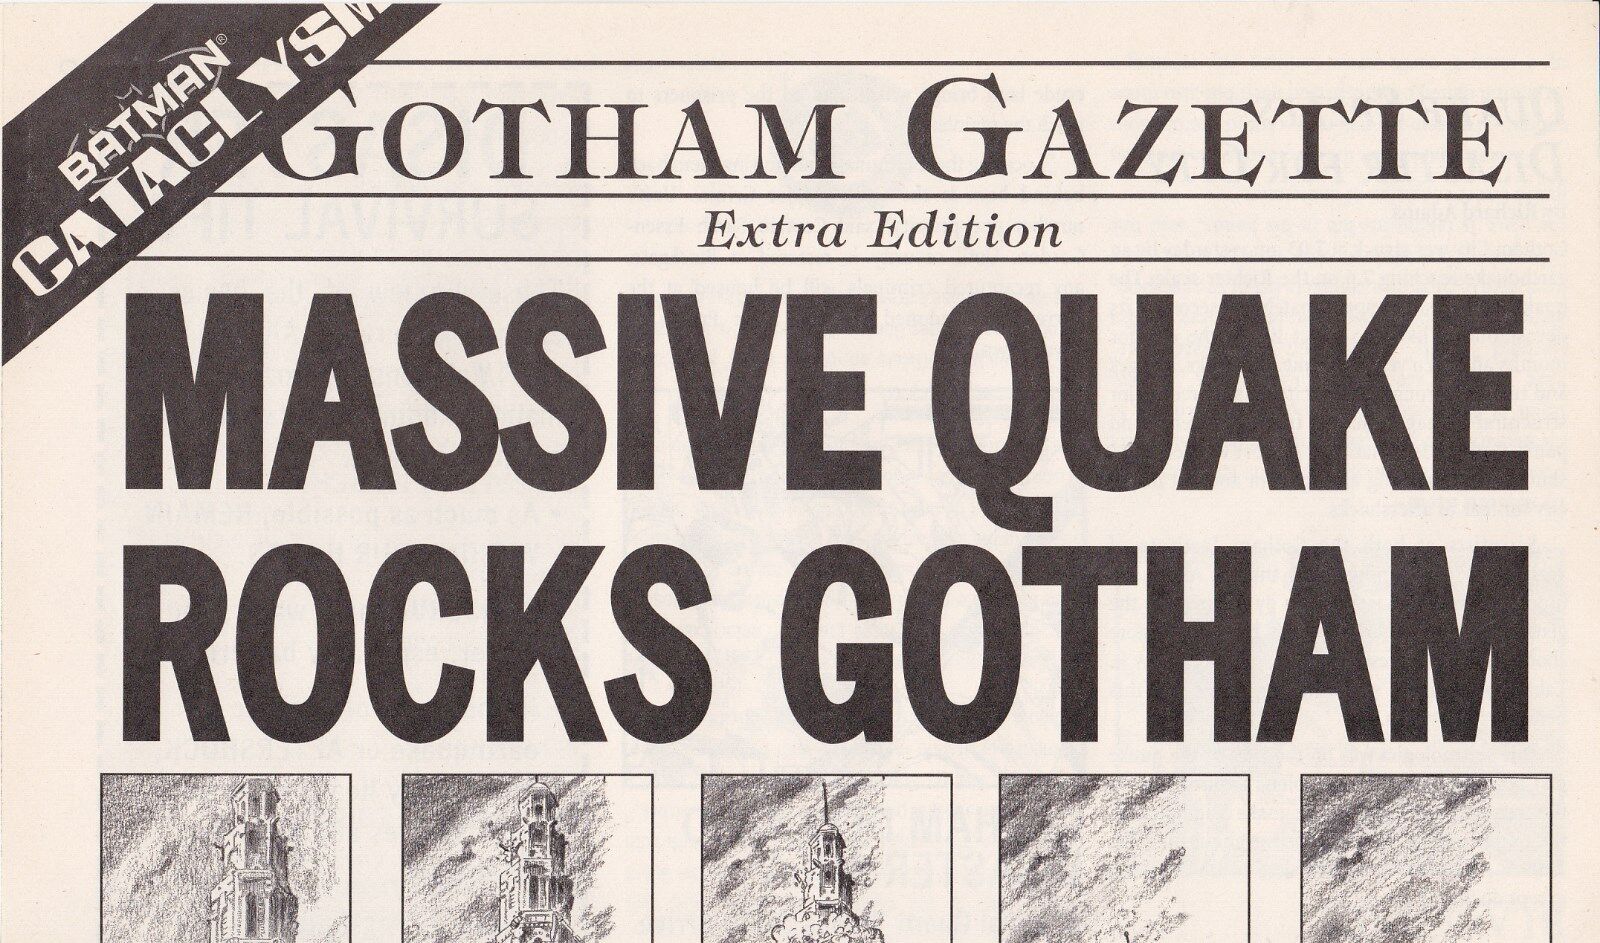 BATMAN CATACLYSM GOTHAM GAZETTE MASSIVE QUAKE ROCKS GOTHAM RETAILER PROMO 1998